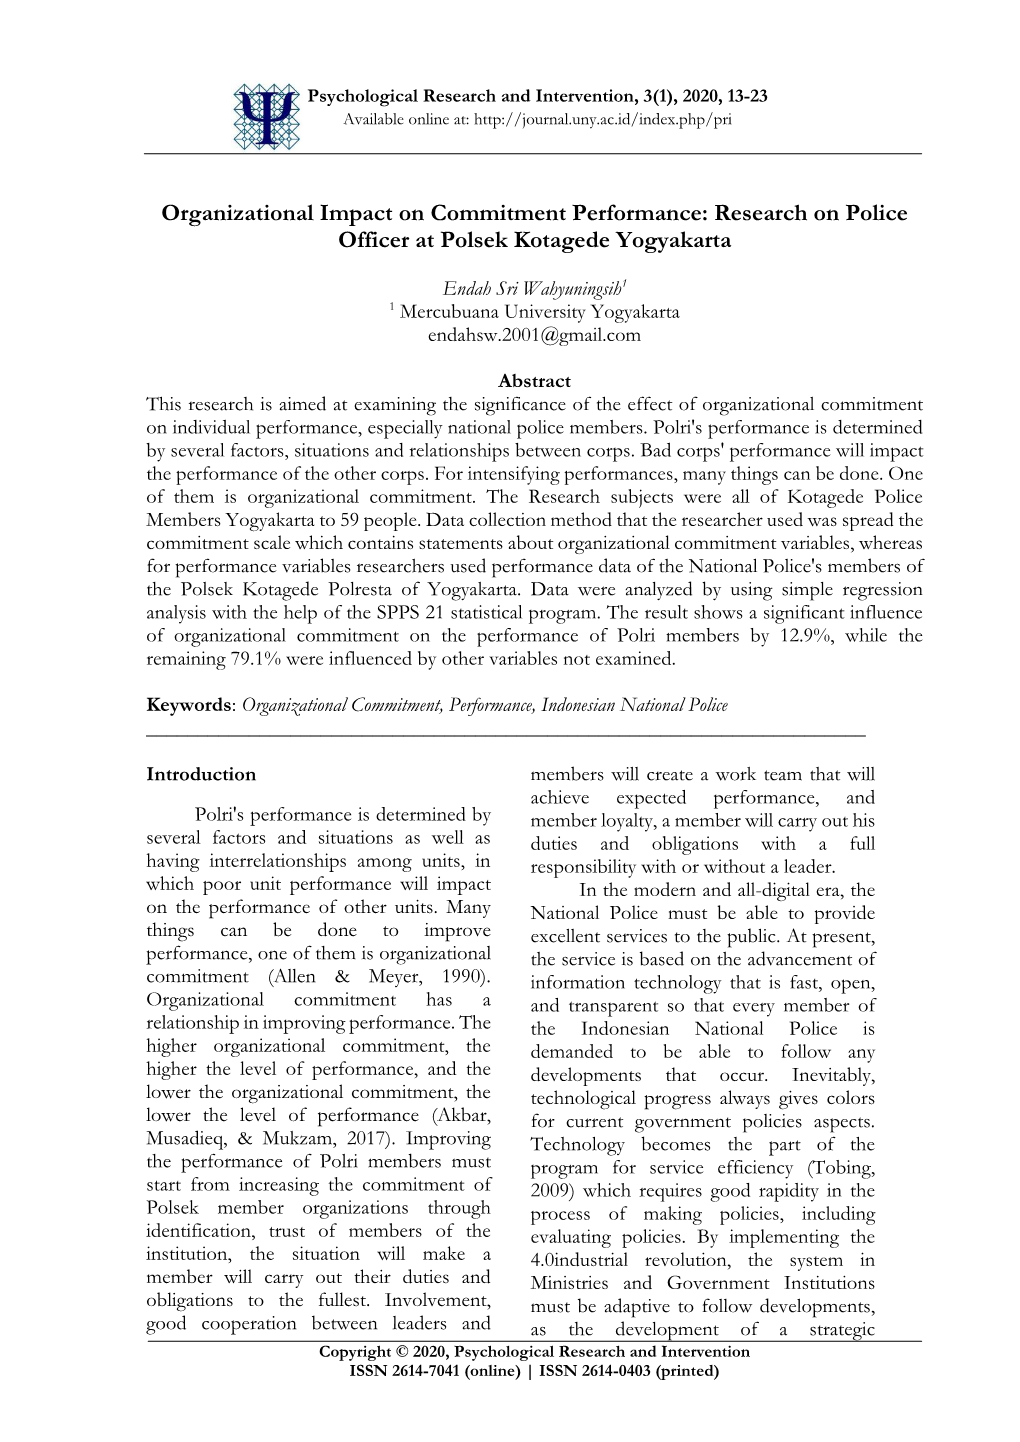 Organizational Impact on Commitment Performance: Research on Police Officer at Polsek Kotagede Yogyakarta